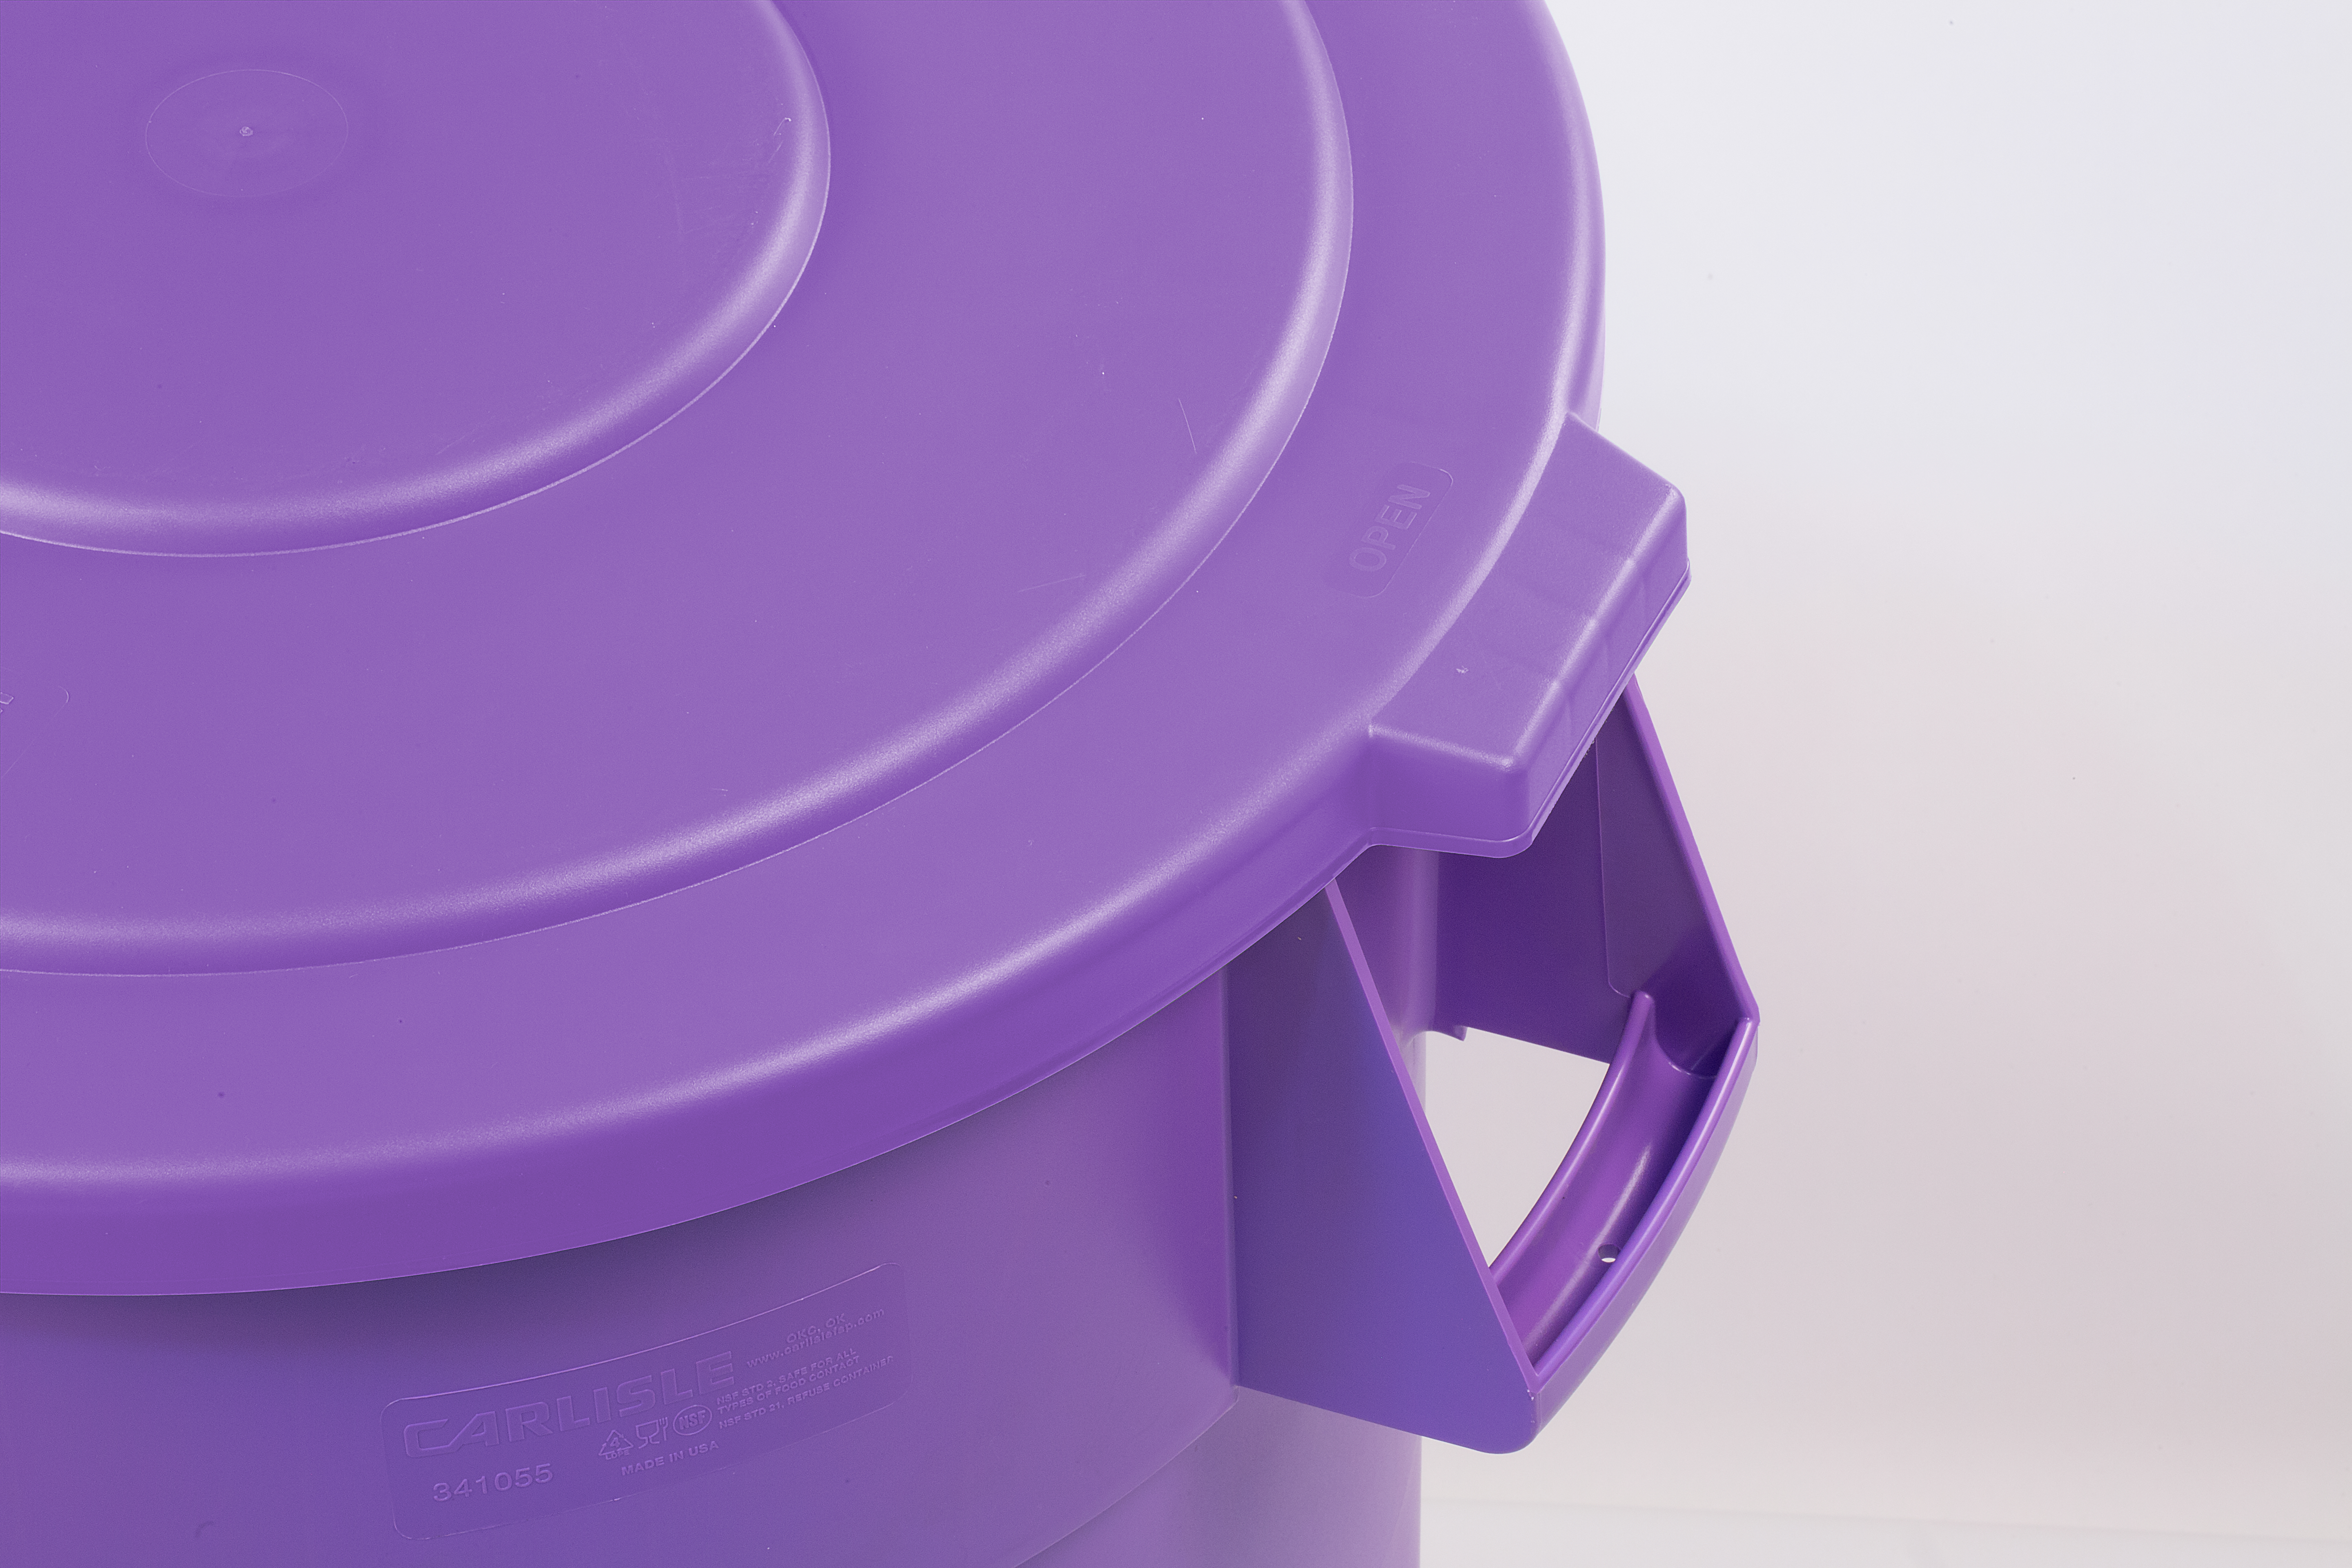 Bronco Round Waste Bin Trash Container Lid 55 Gallon - Purple